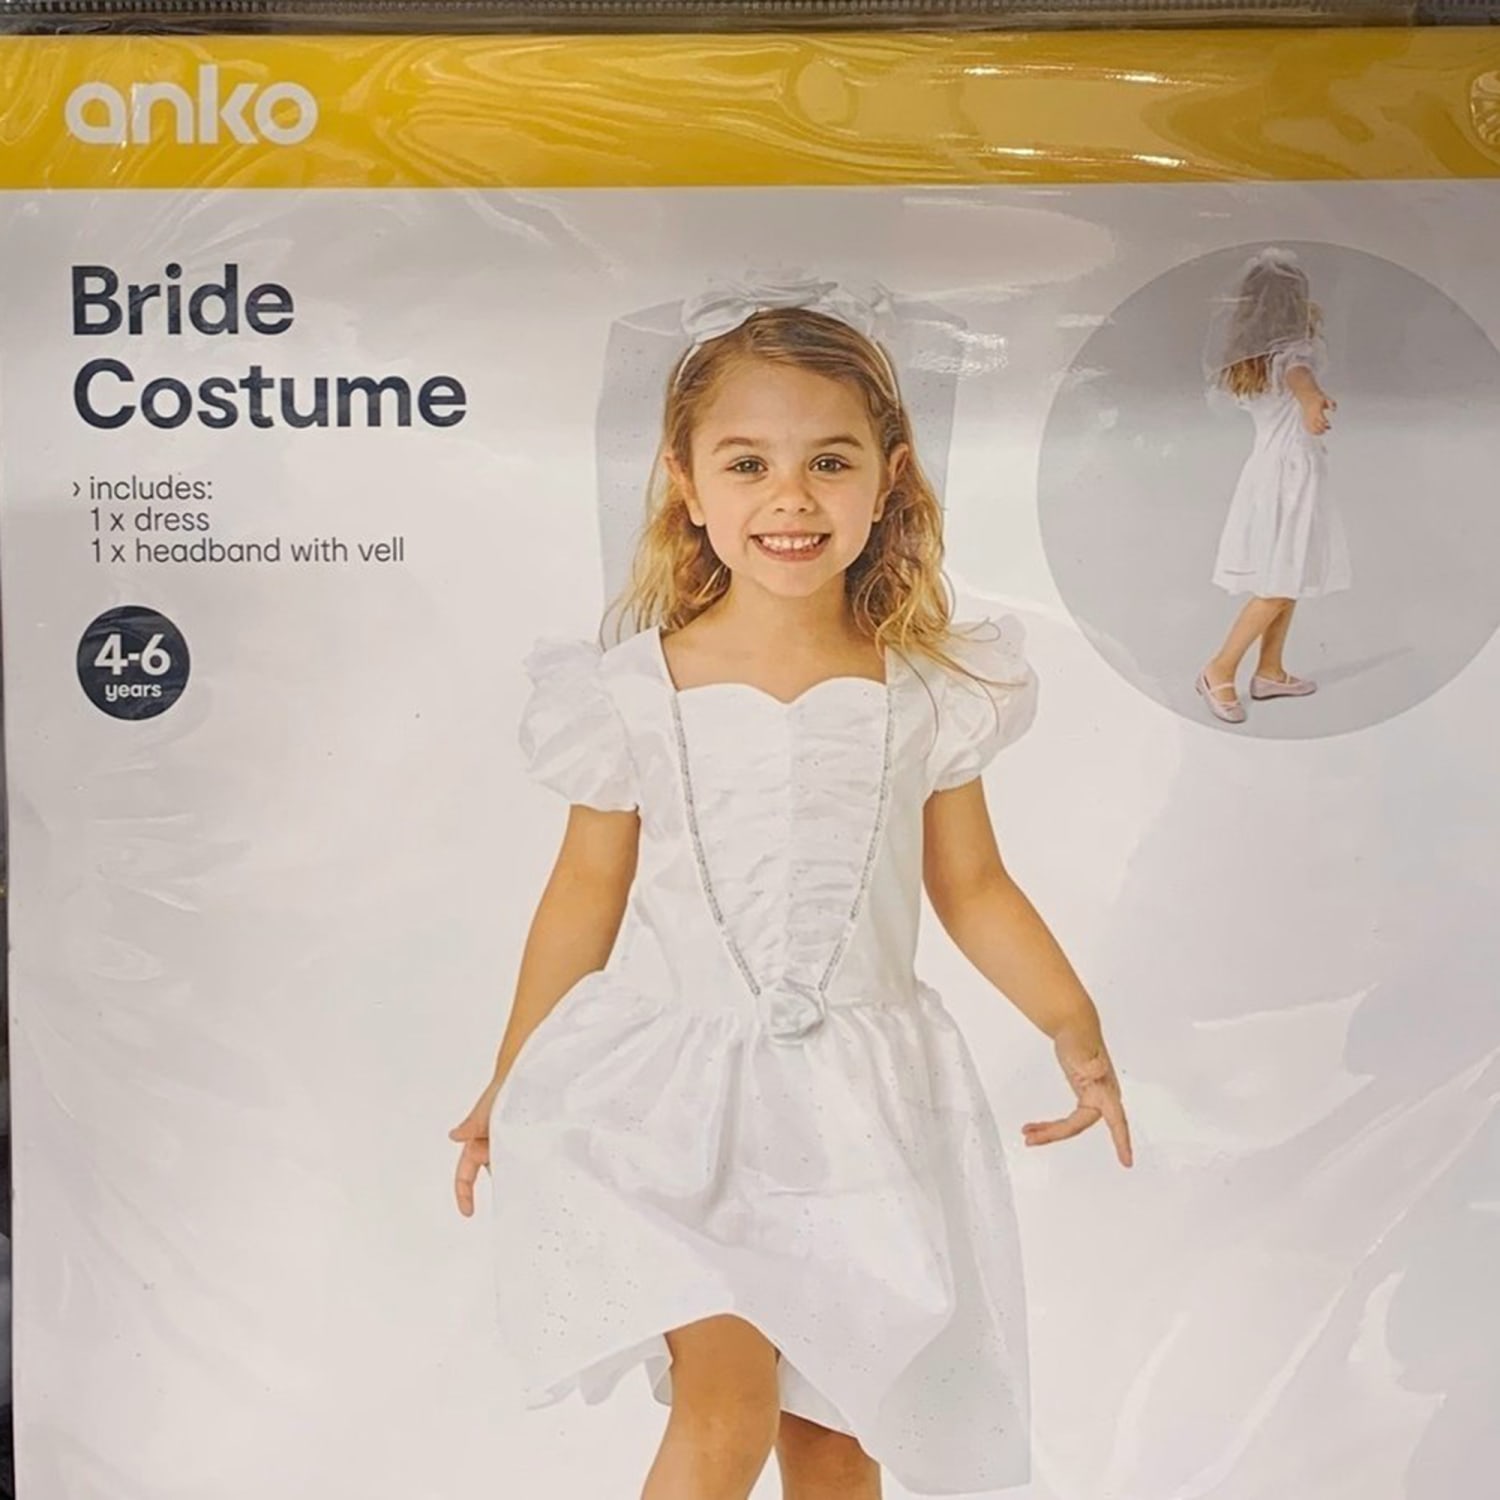 https://media-cldnry.s-nbcnews.com/image/upload/newscms/2019_44/1499630/kmart-child-bride-costume-today-square-191028.jpg